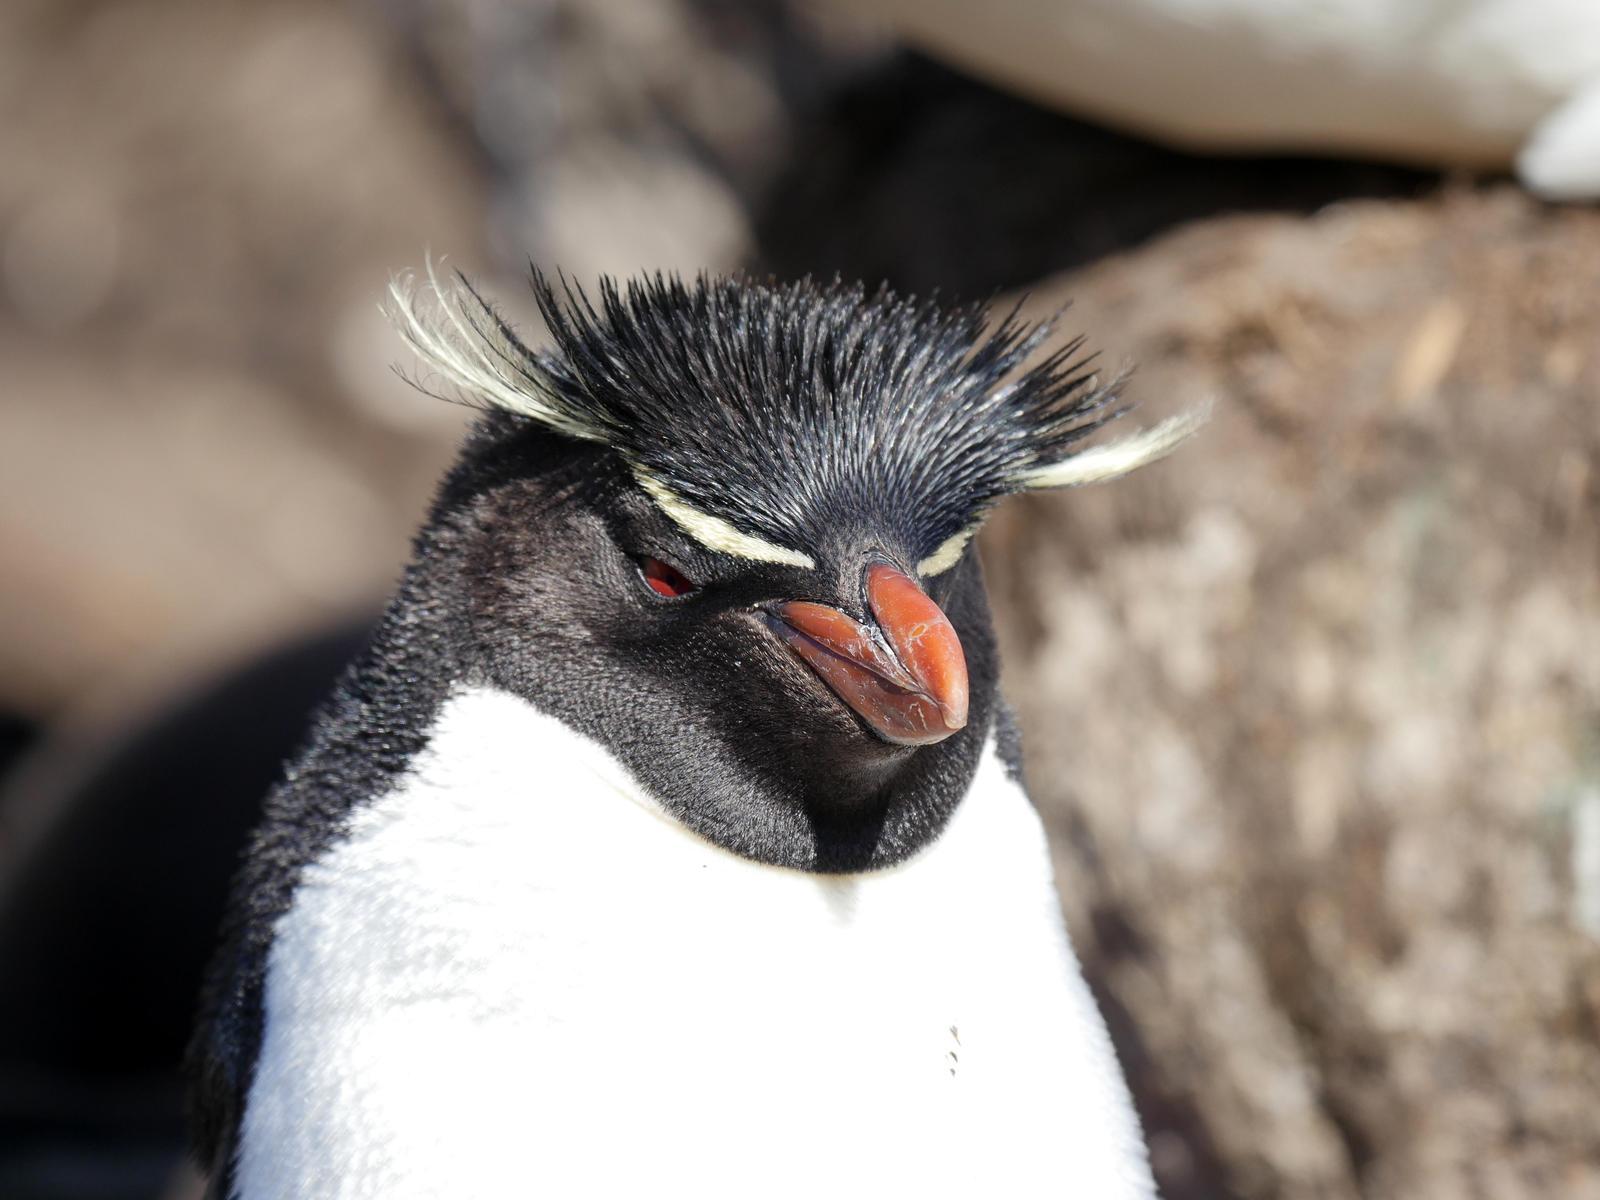 Southern Rockhopper Penguin Photo by Peter Lowe